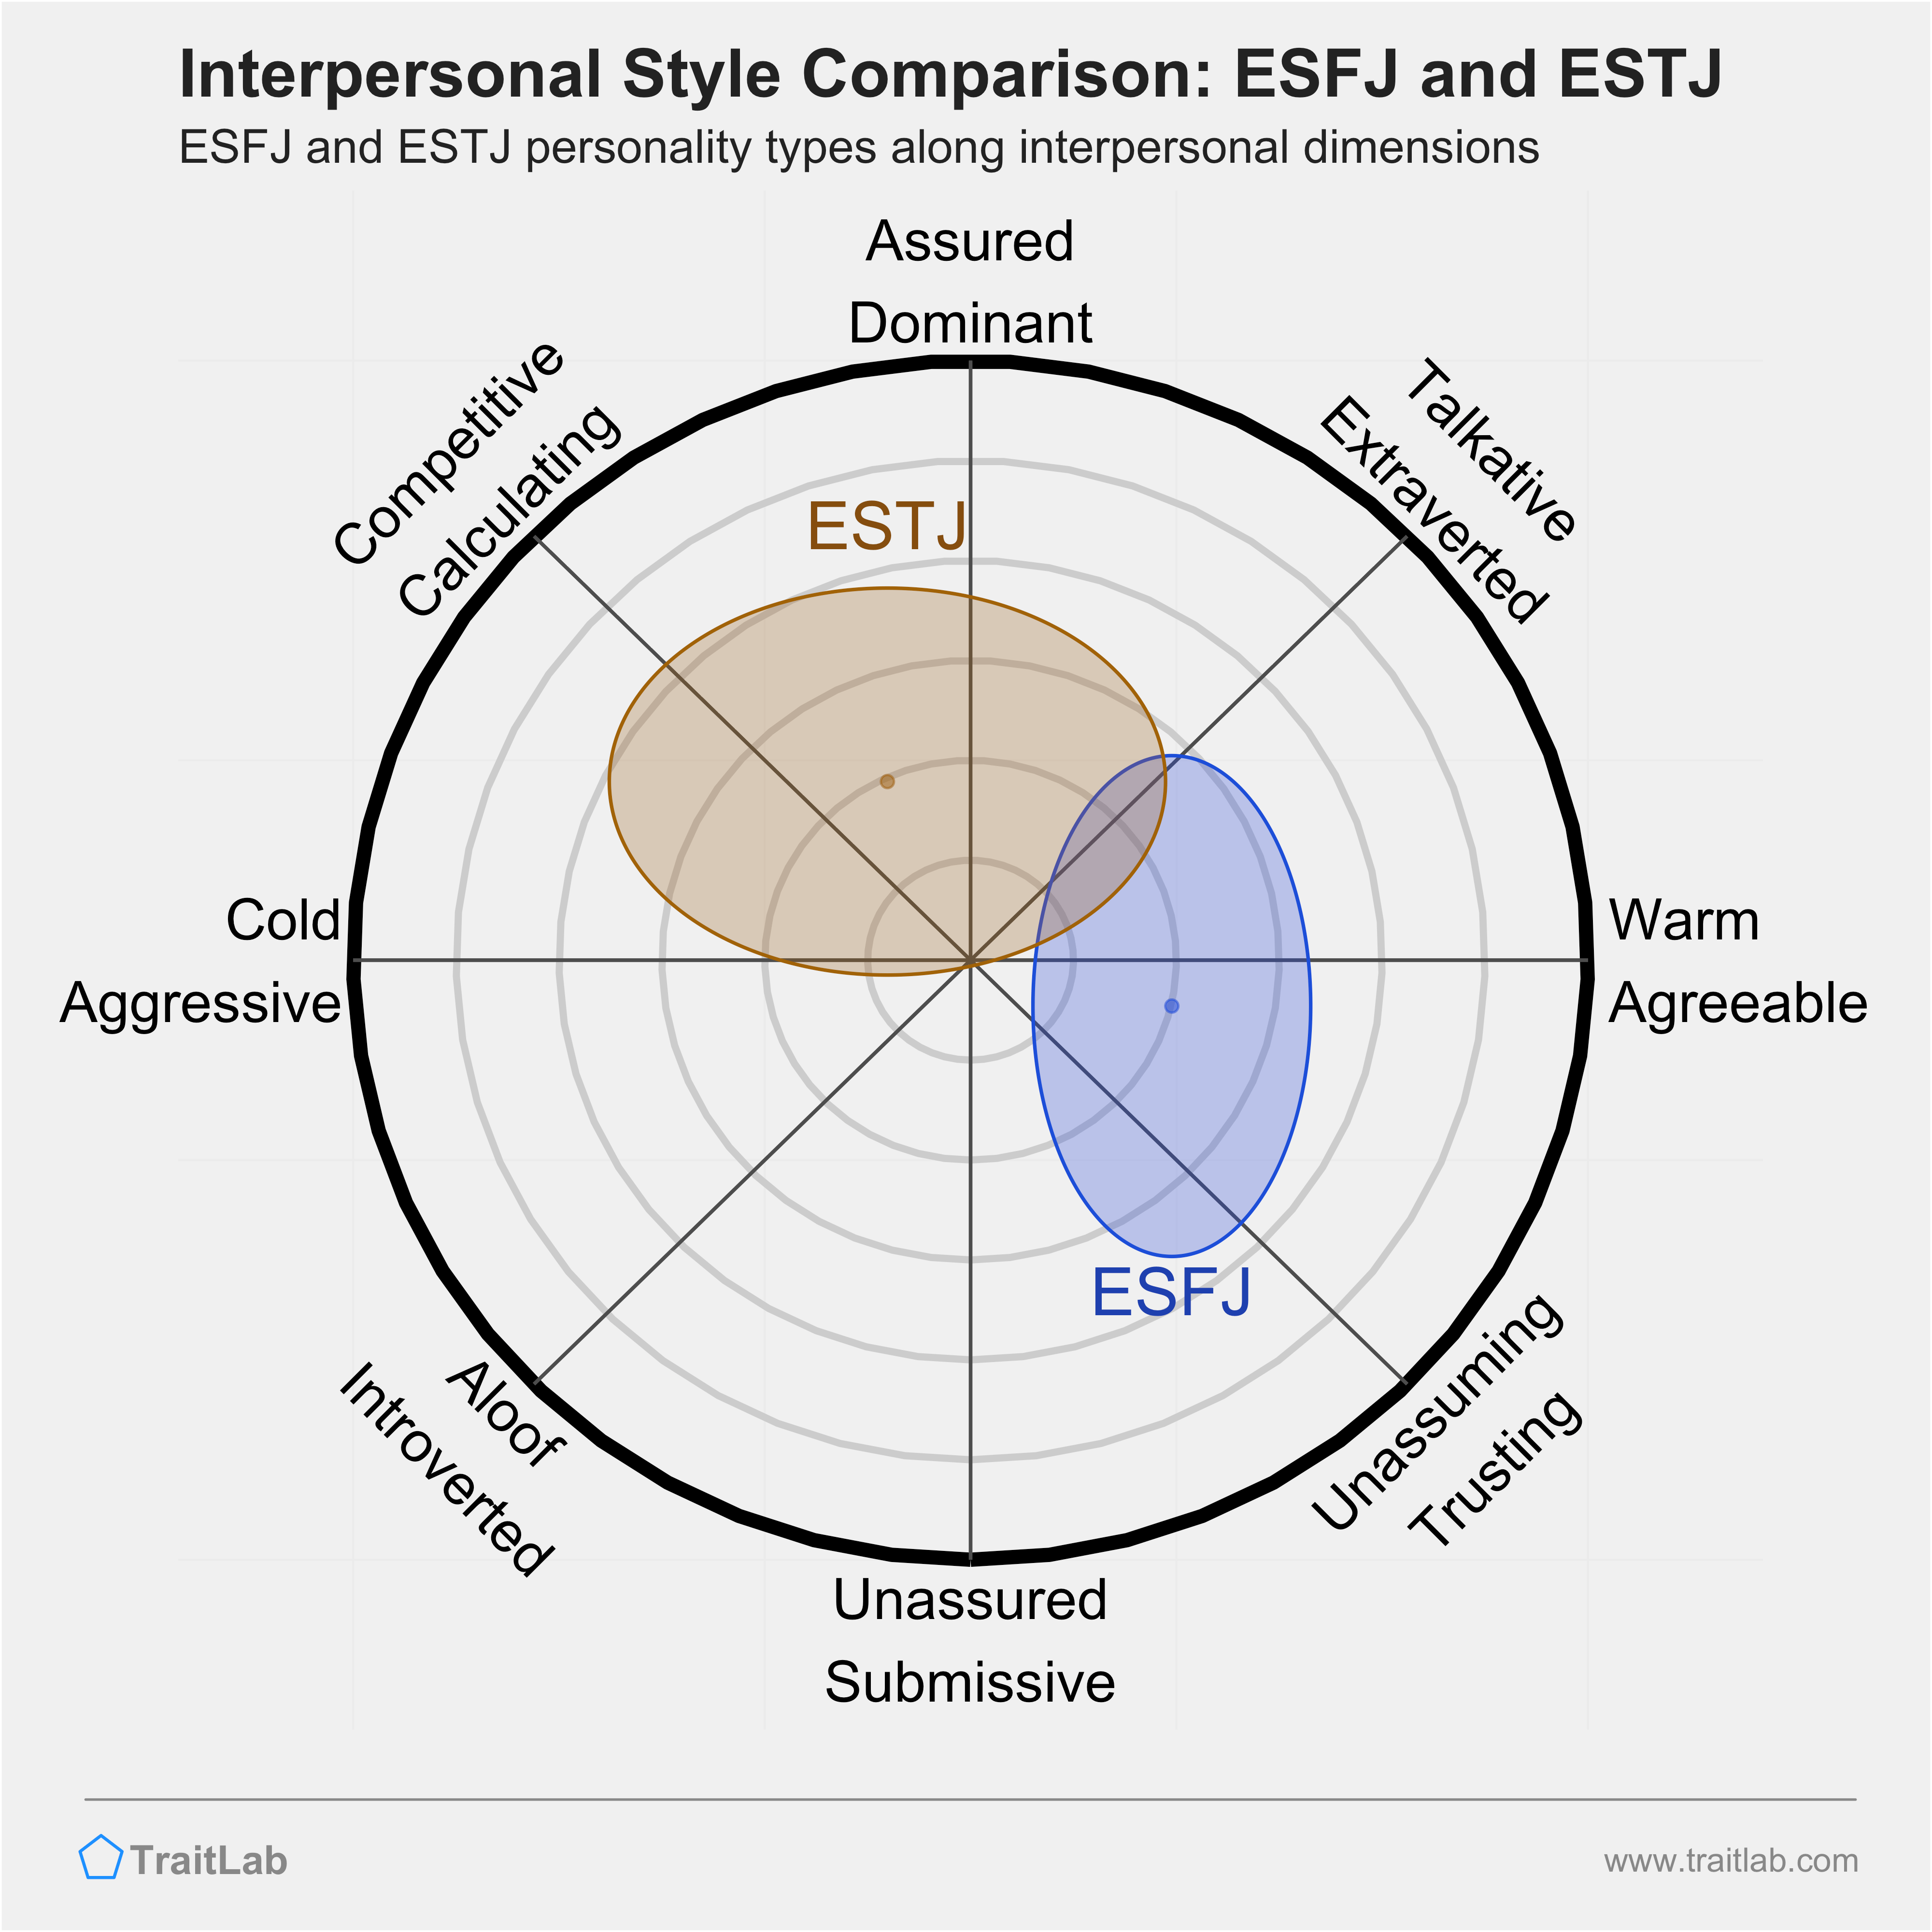 ESFJ and ESTJ comparison across interpersonal dimensions